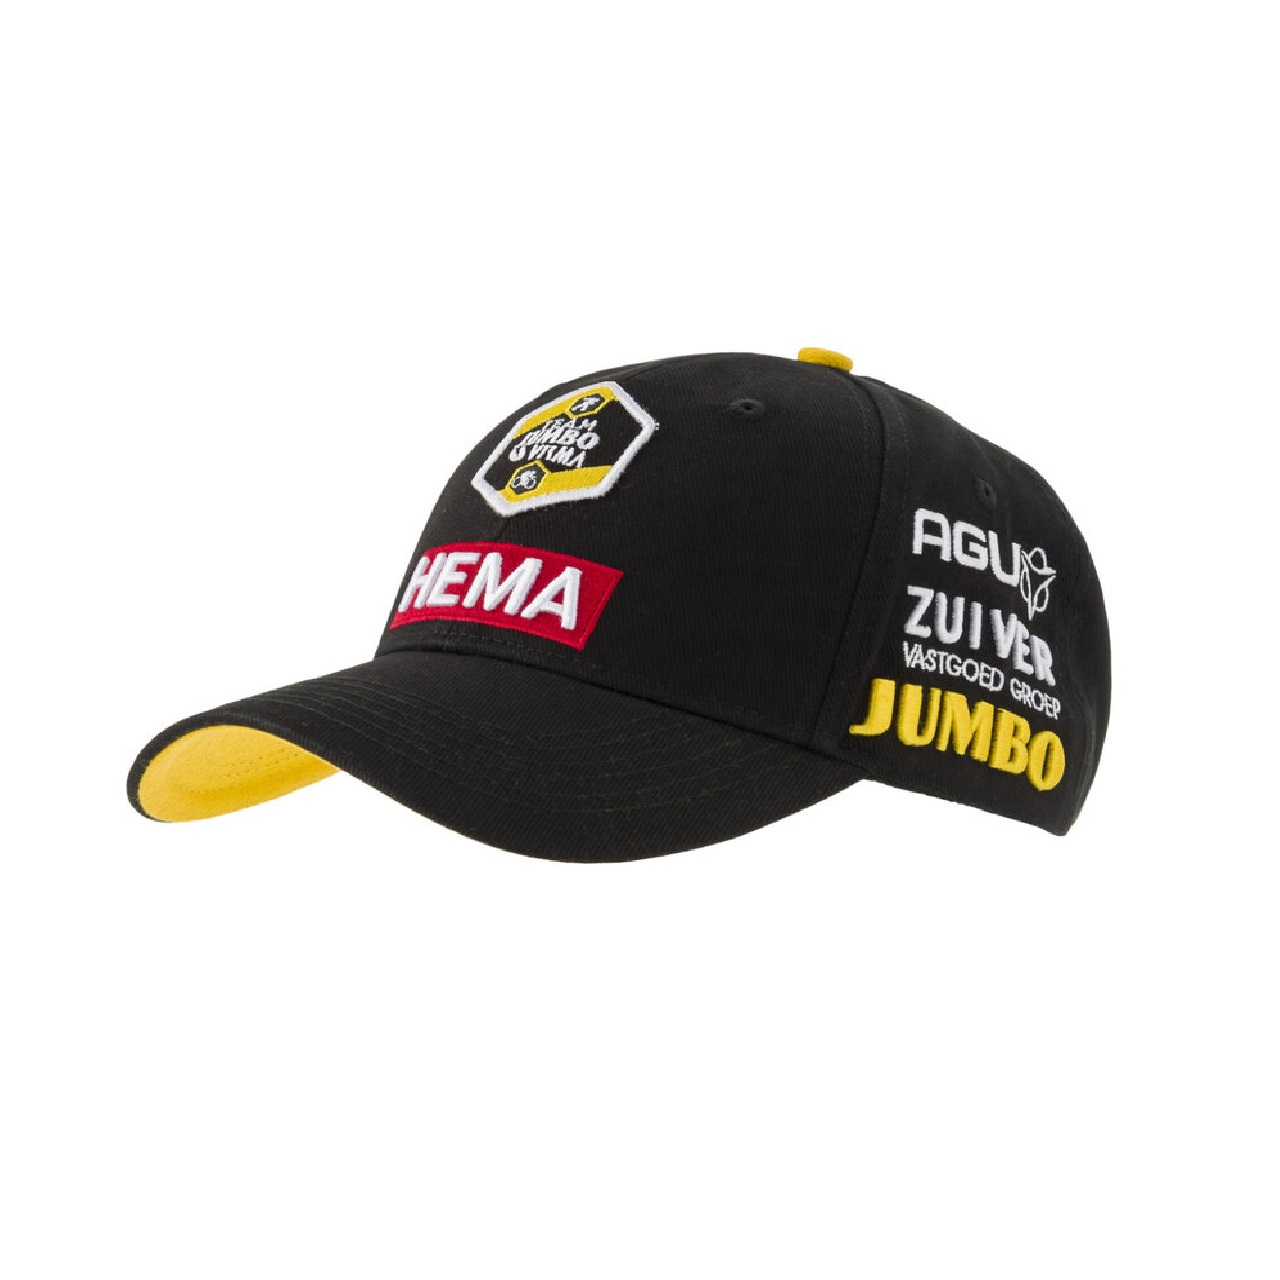 AGU Team Jumbo-Visma  Podium Adj Cap Cycling Hat